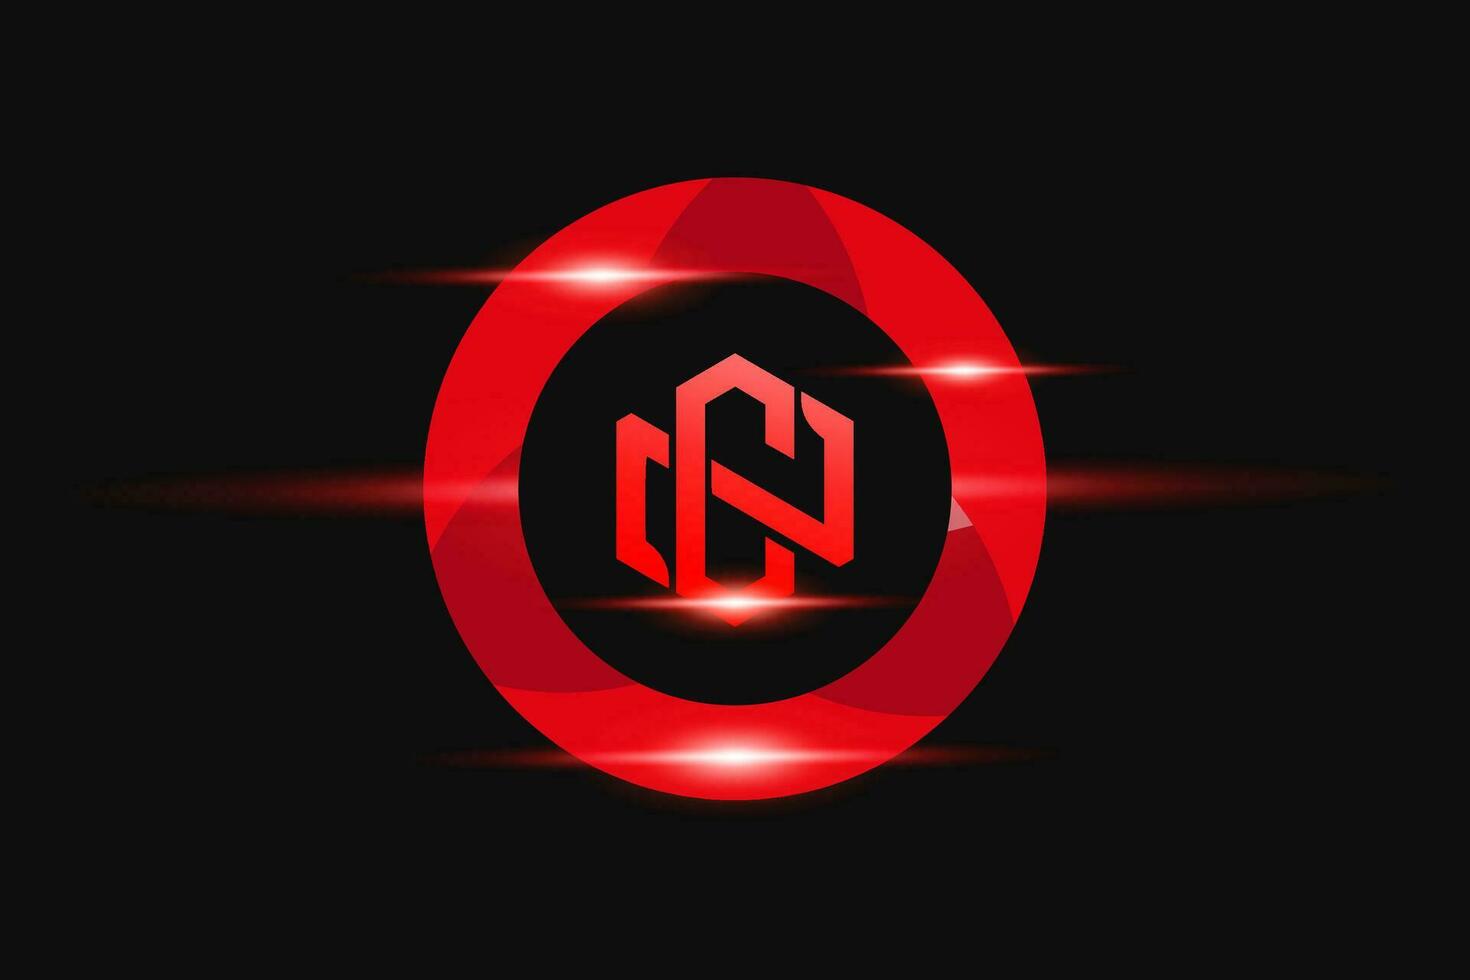 CN Red logo Design. Vector logo design for business.